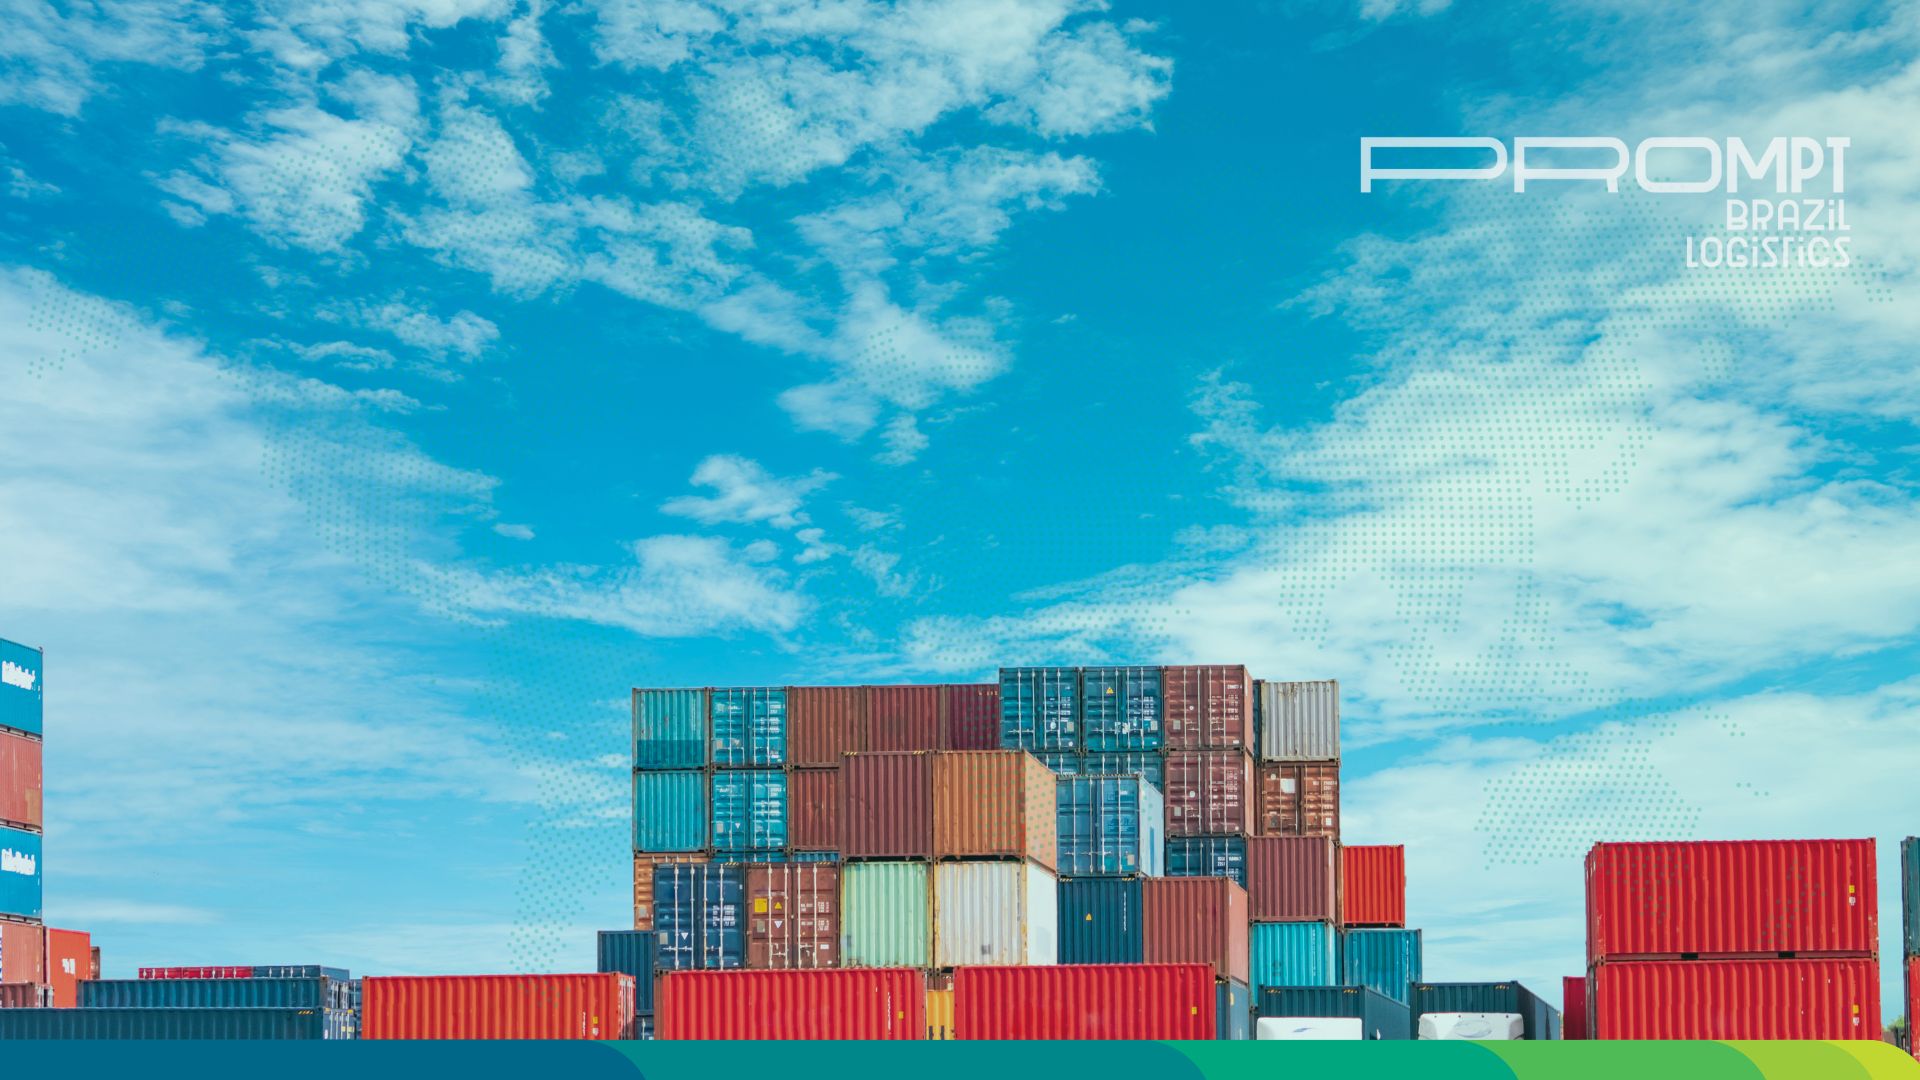 tipos de carga modal marítimo conteiners  prompt brazil logistica